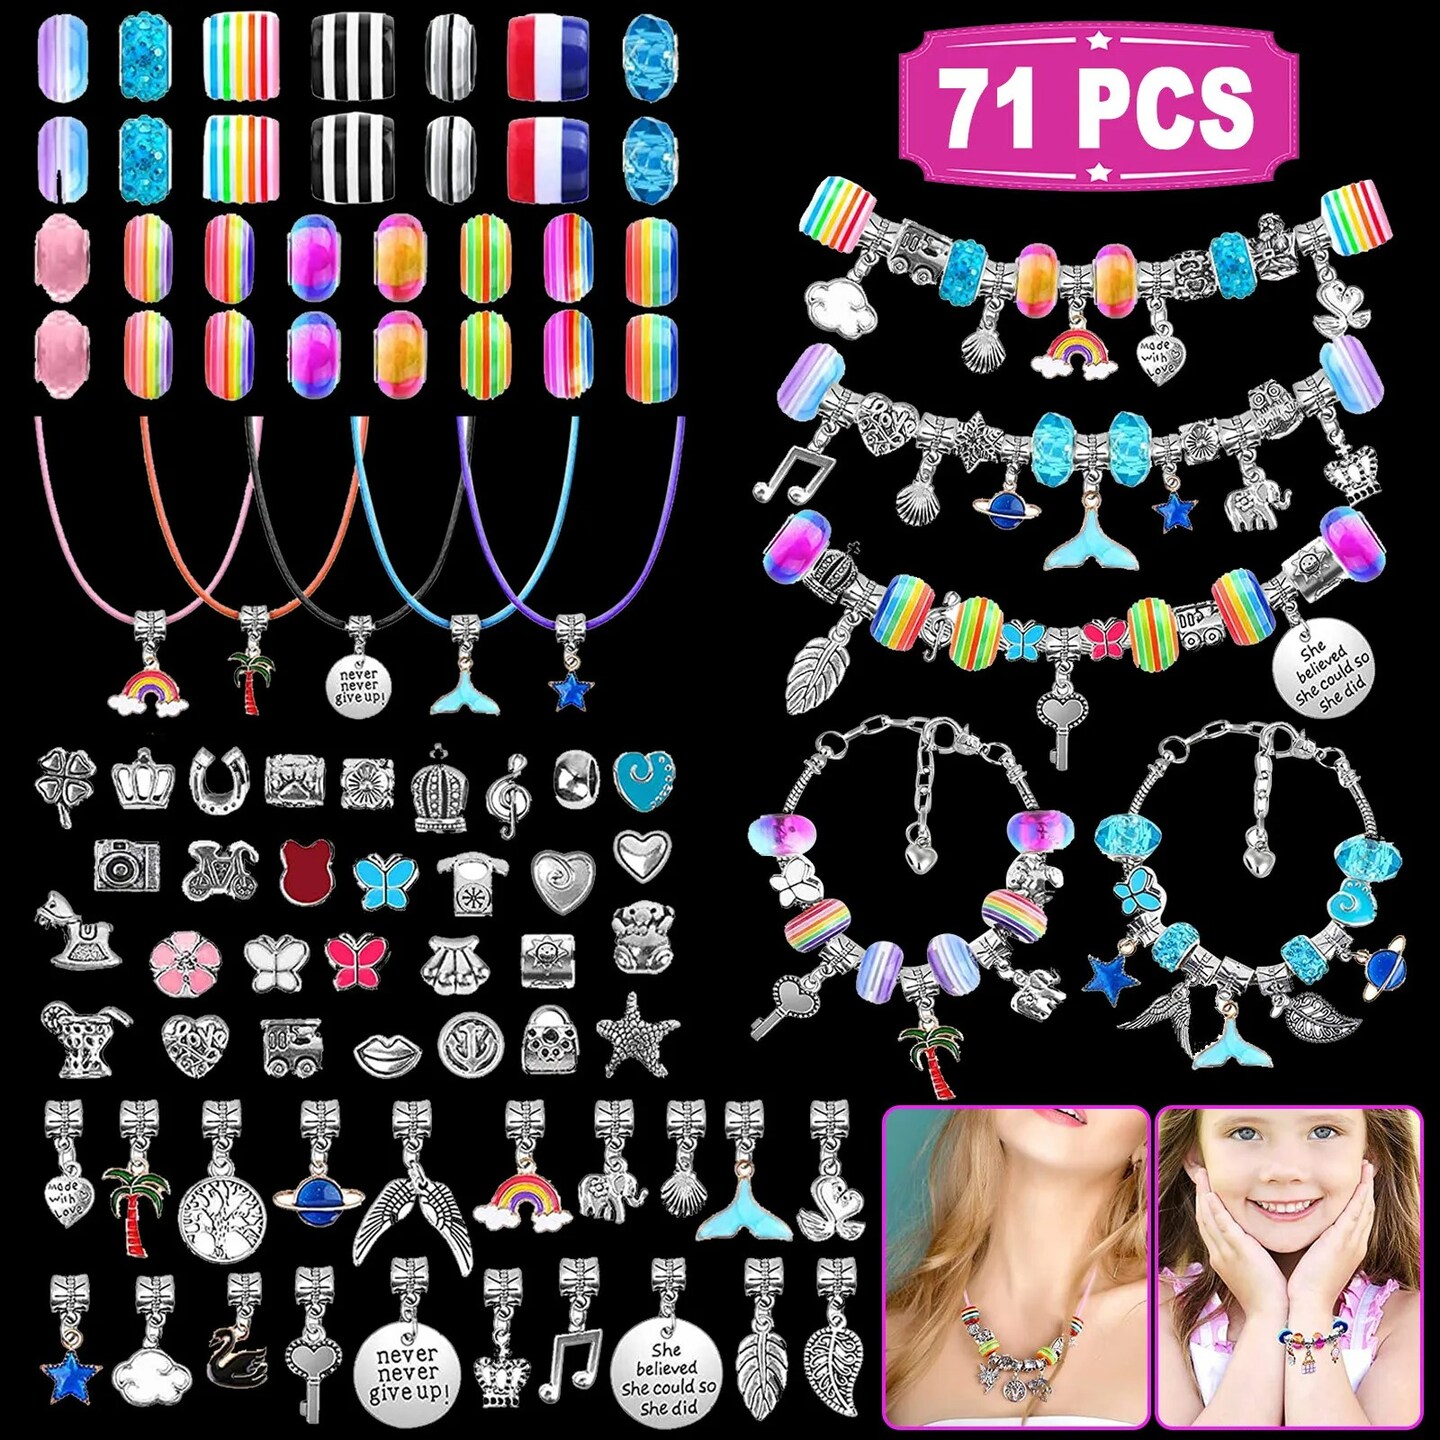 71 pcs Bracelet Making Kit Beads Jewelry Pendant Charm Set DIY Craft Girls Kids